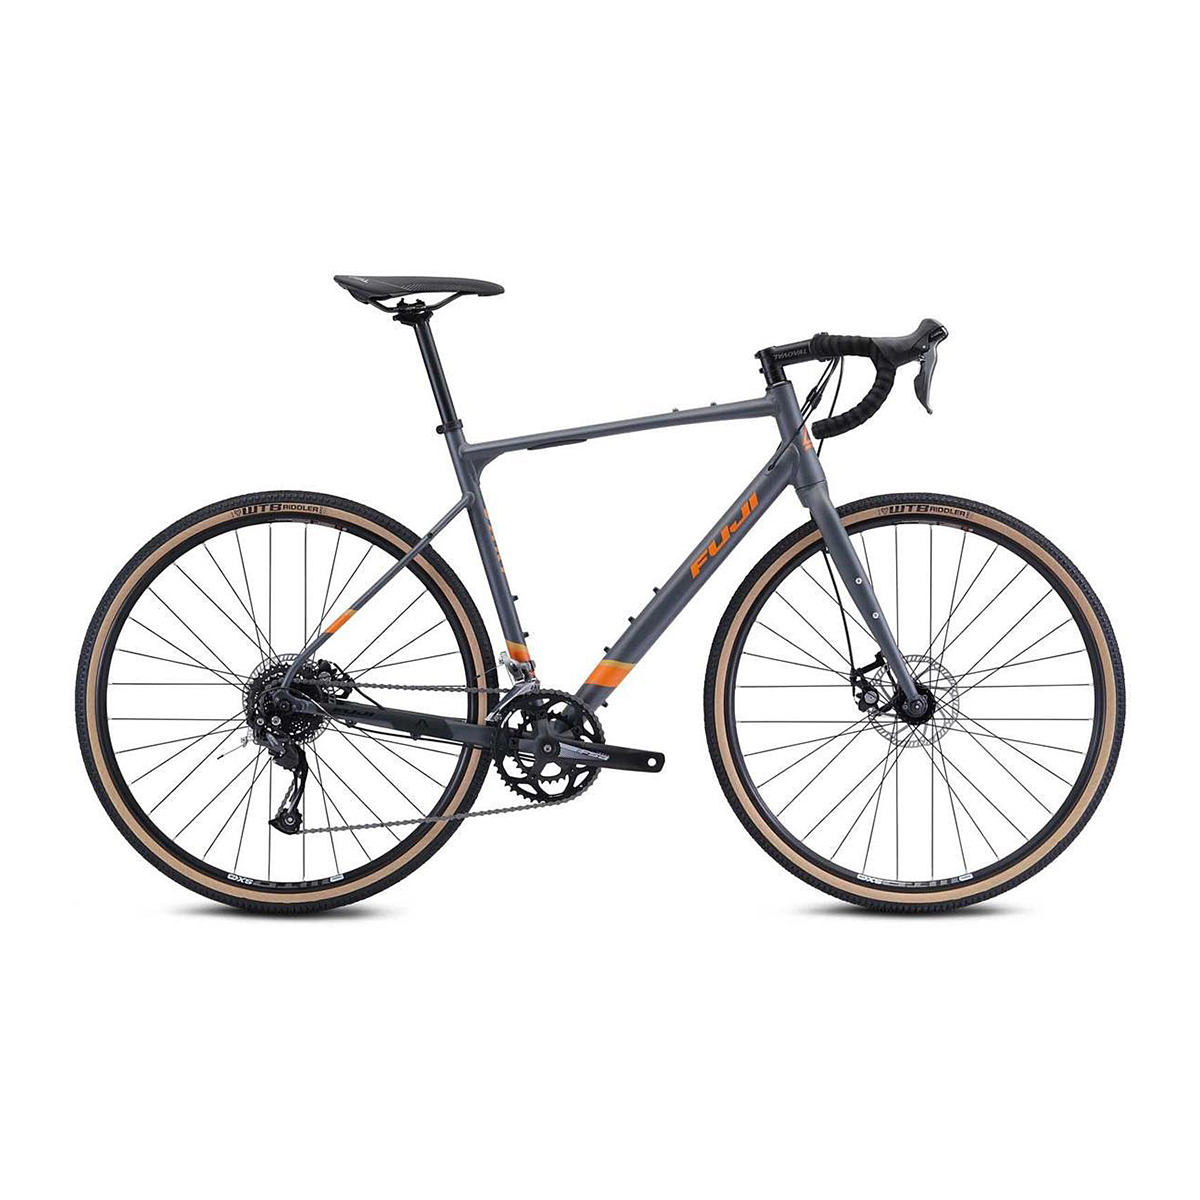 Bicikl Fuji Jari 2.5 Satin Iron | BikerShop